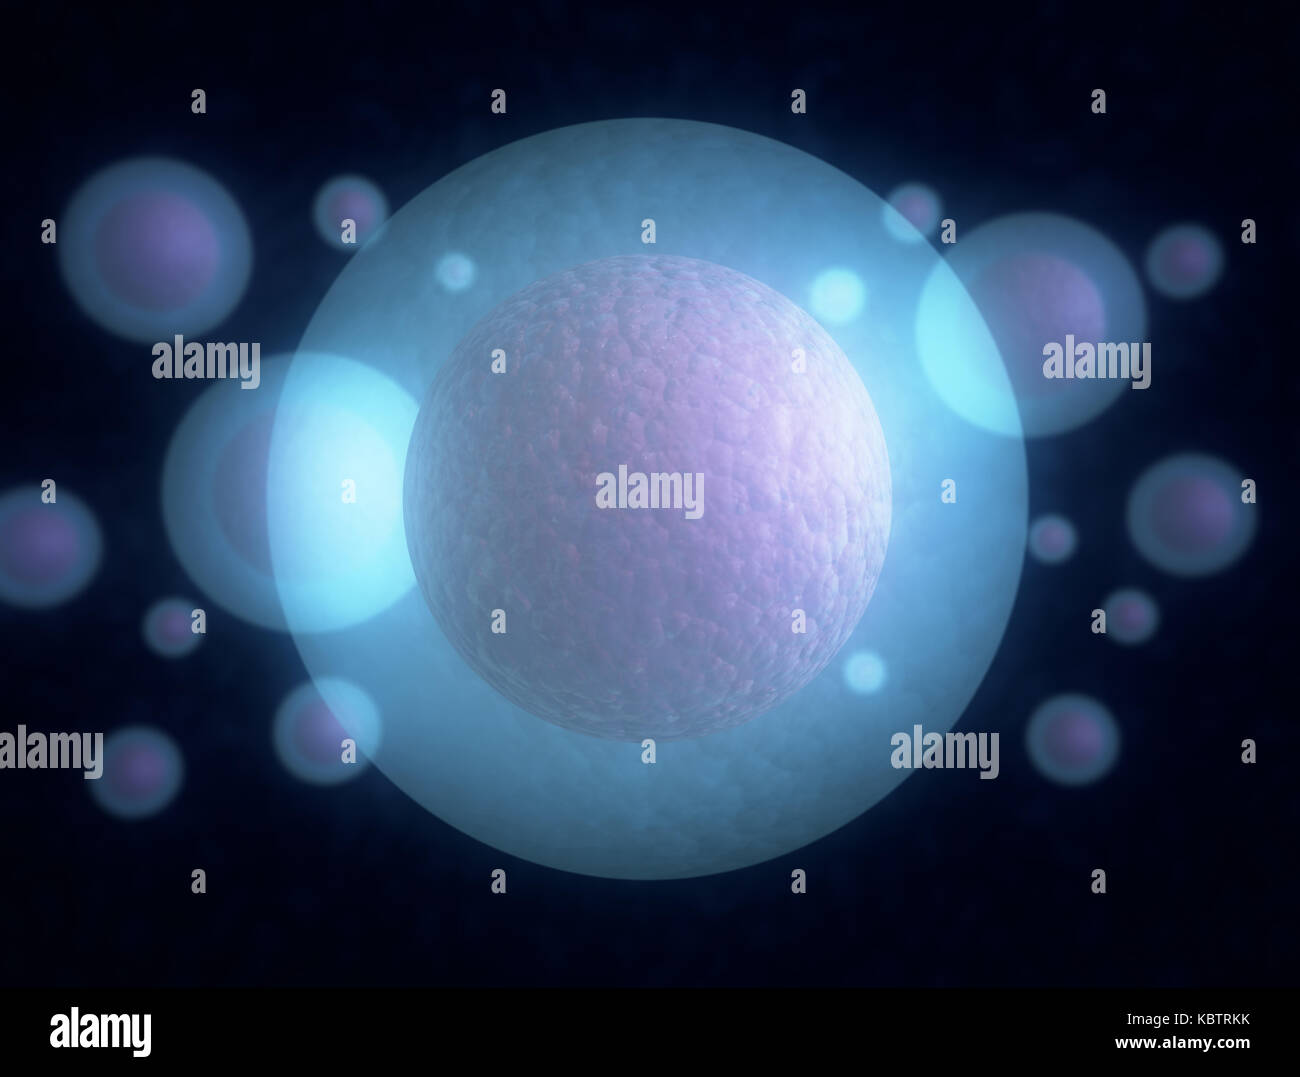 Embryonic stem cells 3d illustration Stock Photo